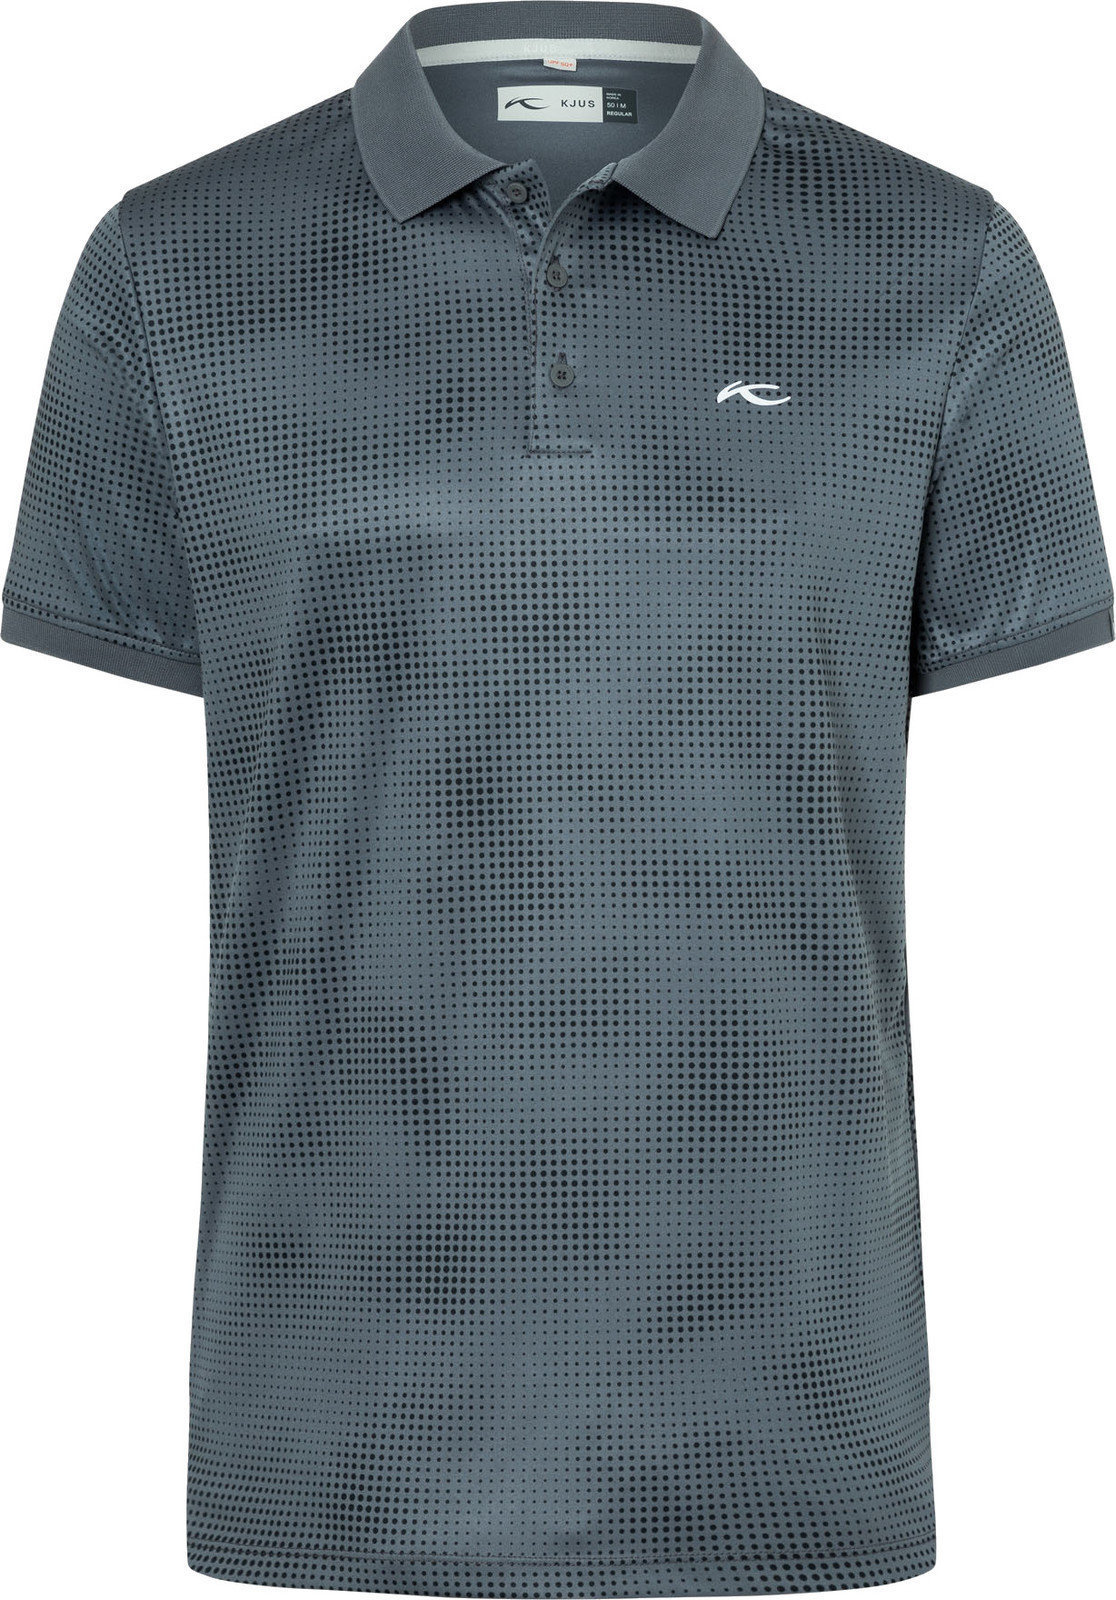 Polo Shirt Kjus Spot Printed Steel Grey 50